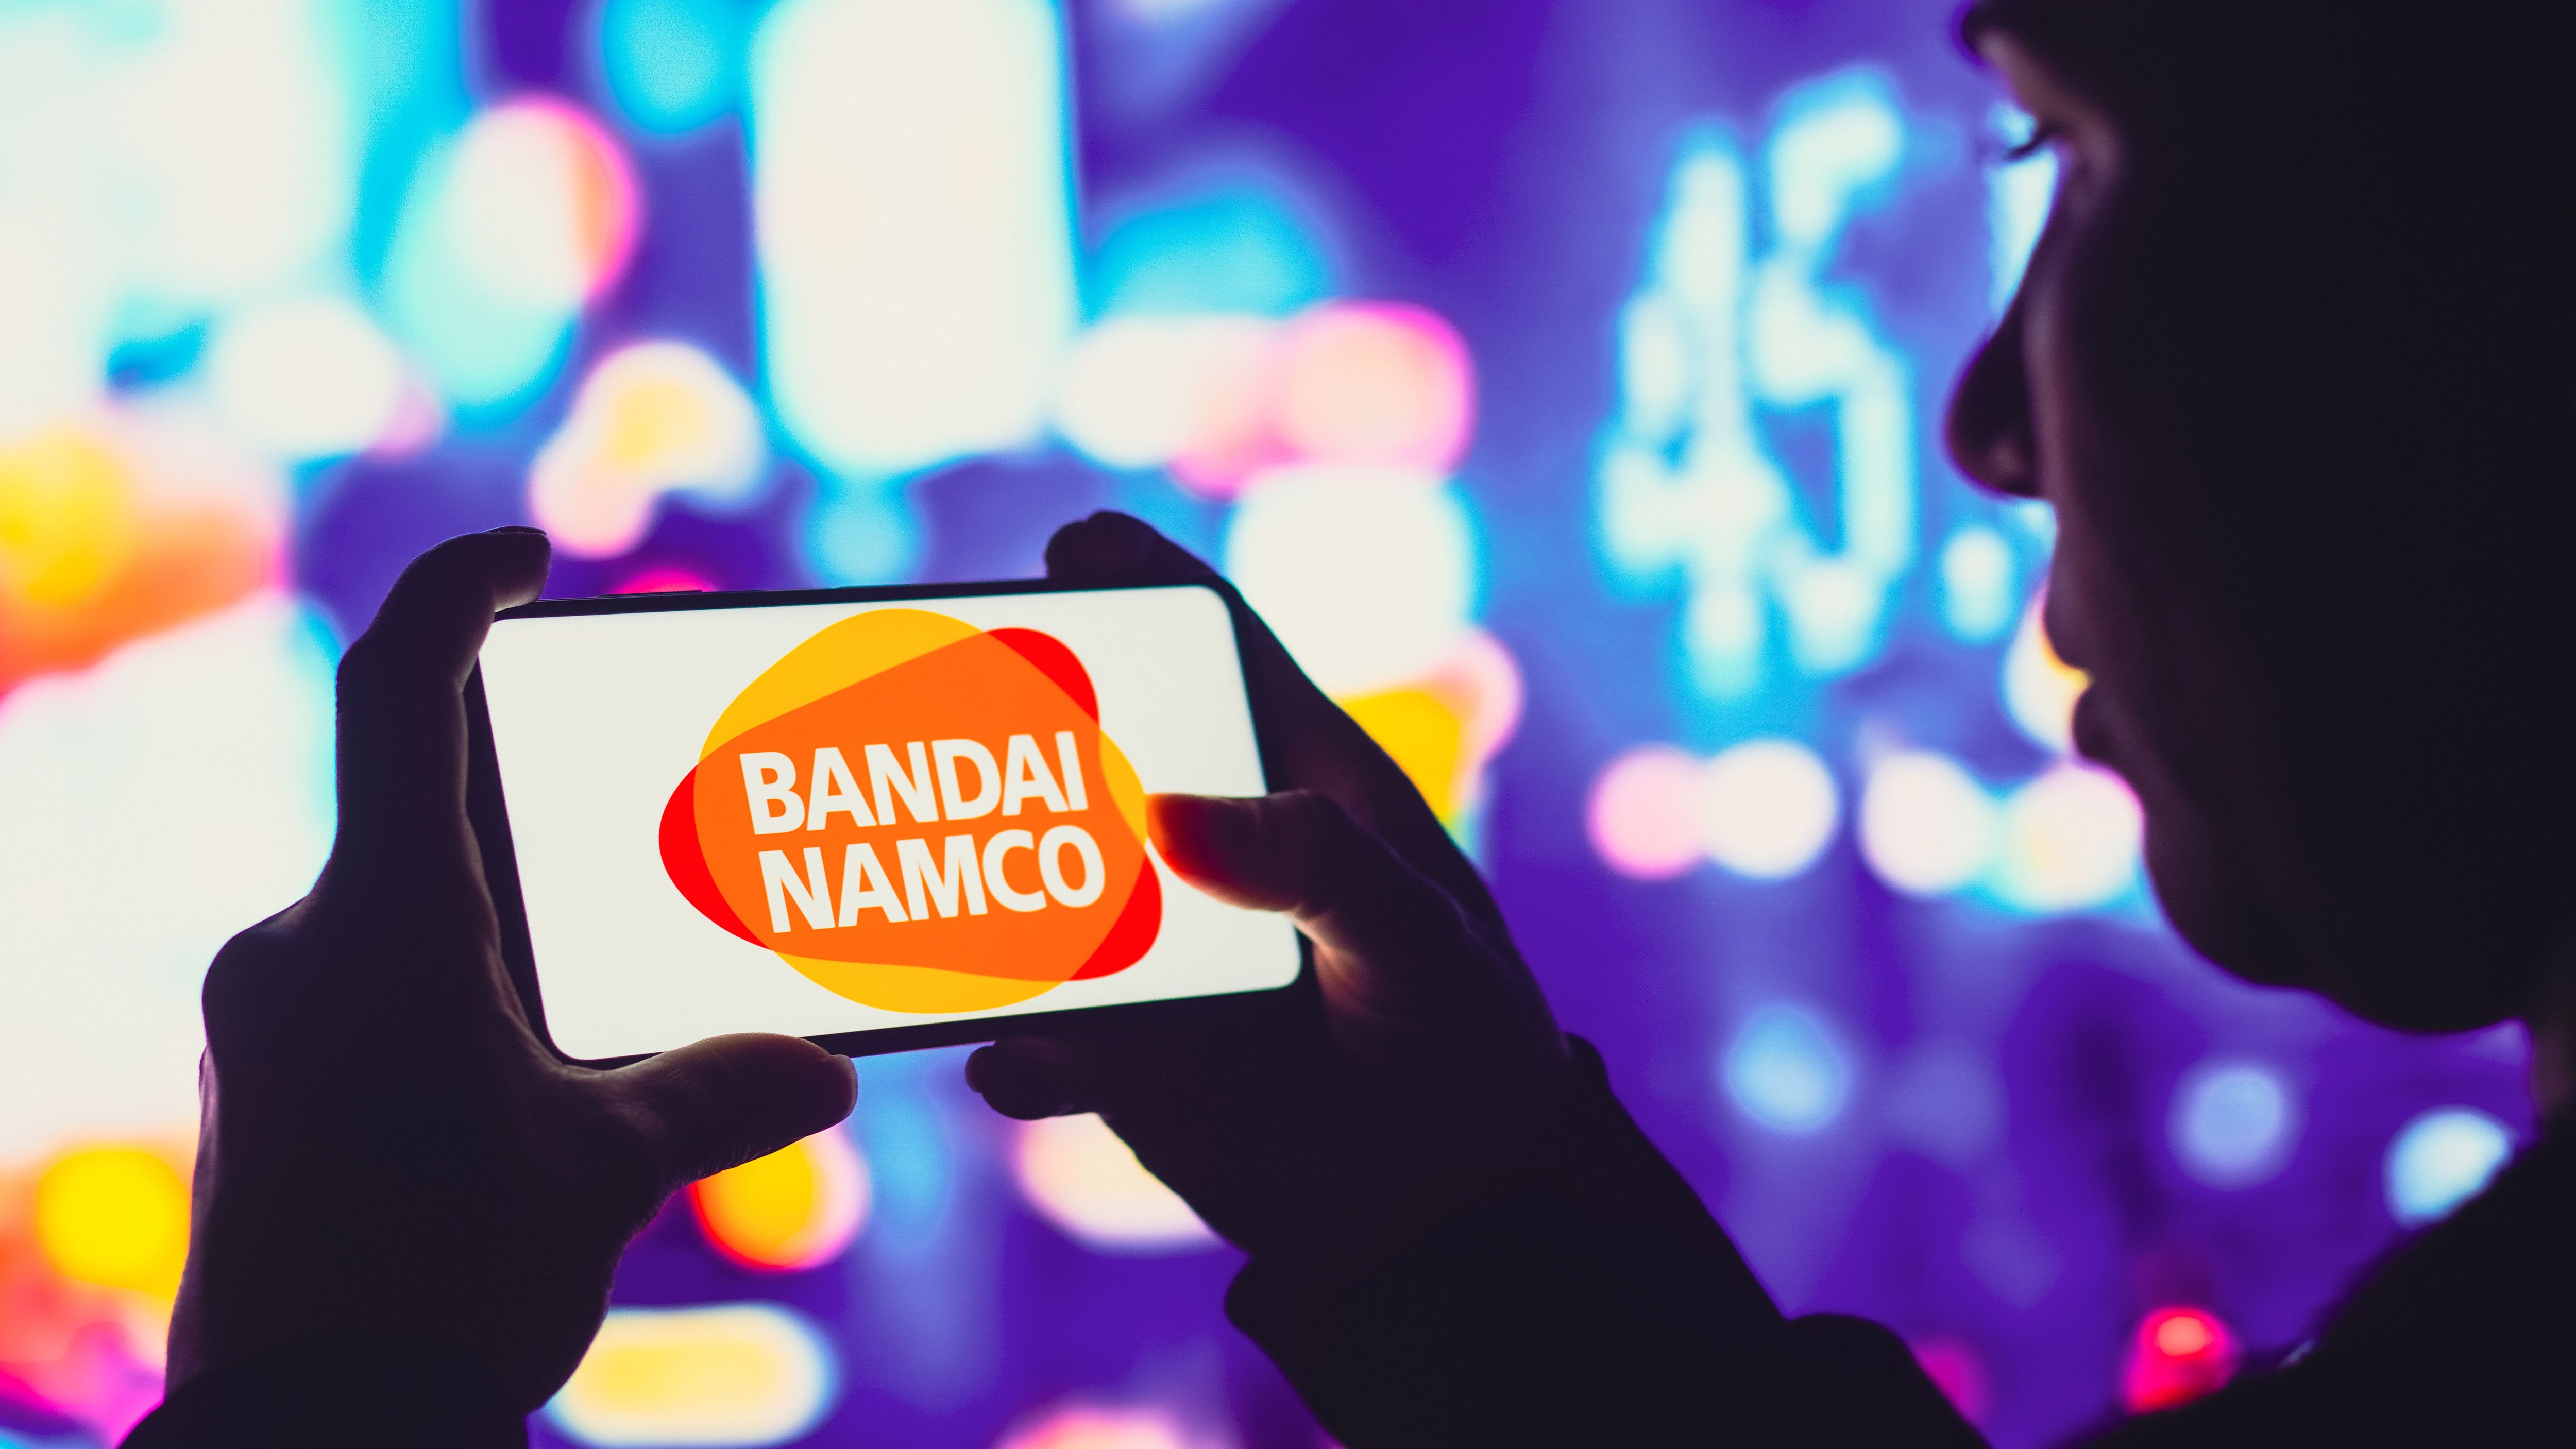 Bandai Namco confirms hack after ALPHV ransomware data leak threat